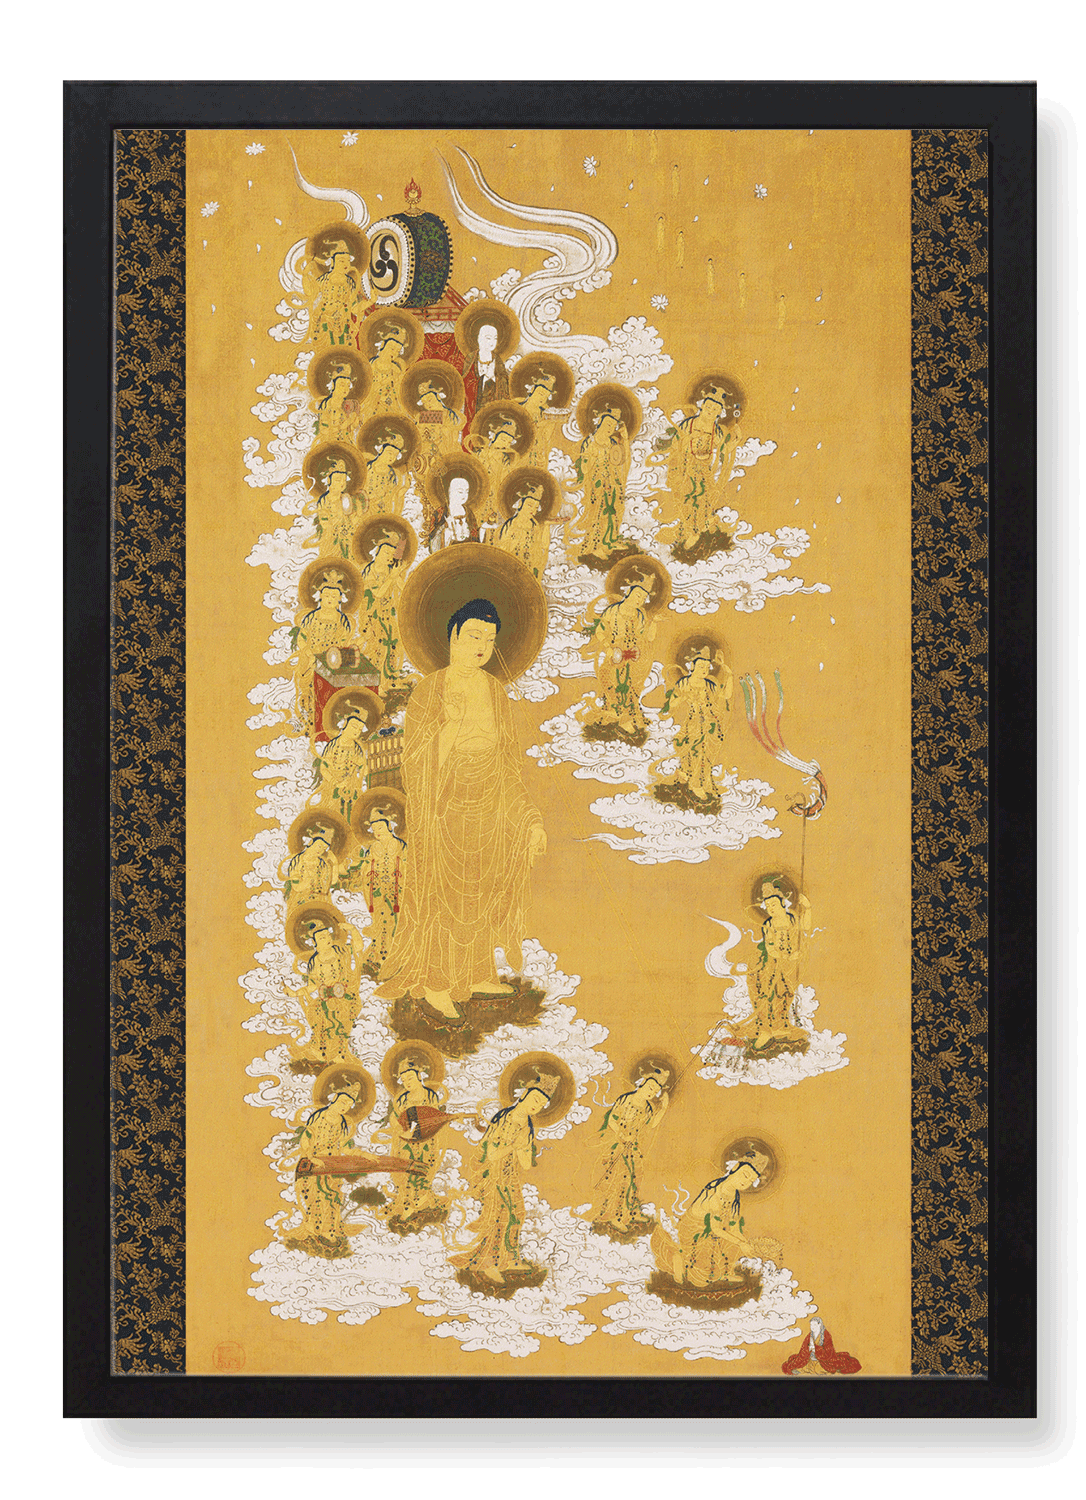 DESCENT OF AMIDA BUDDHA (1668)